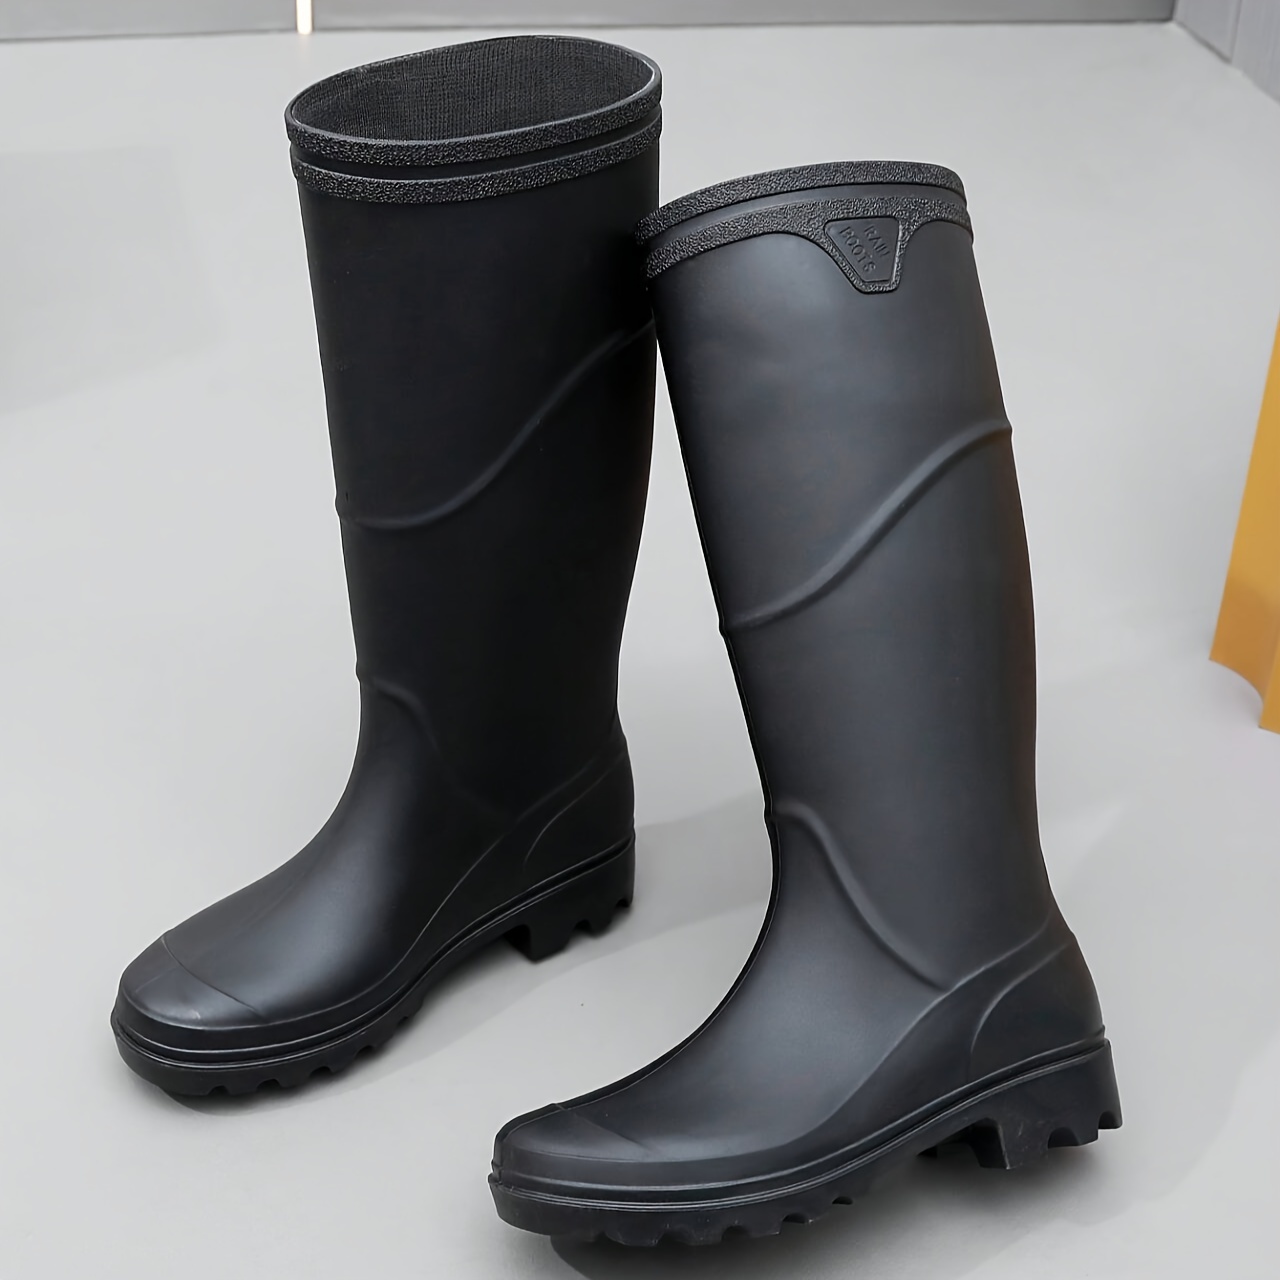 

Men's High Top Rain Boots, Wear-resistant Waterproof Non-slip Galoshes For Outdoor Walking Fishing